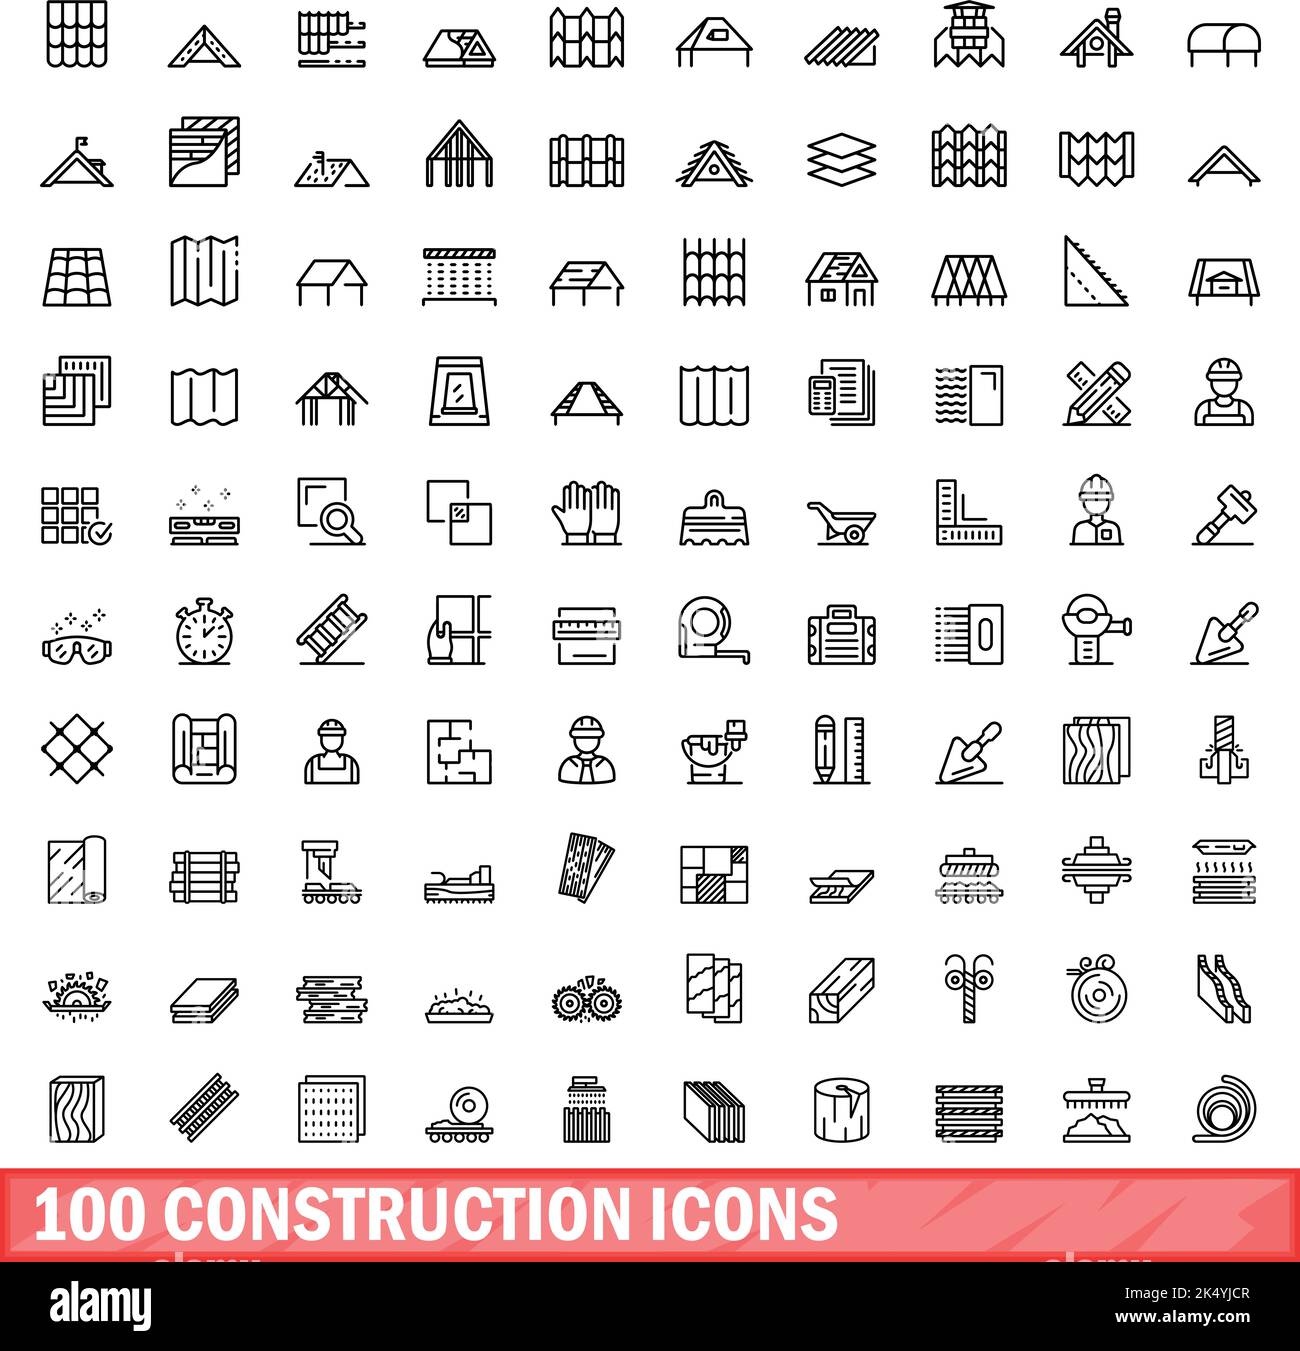 ensemble de 100 icônes de construction. Illustration de 100 icônes de construction ensemble de vecteurs isolé sur fond blanc Illustration de Vecteur